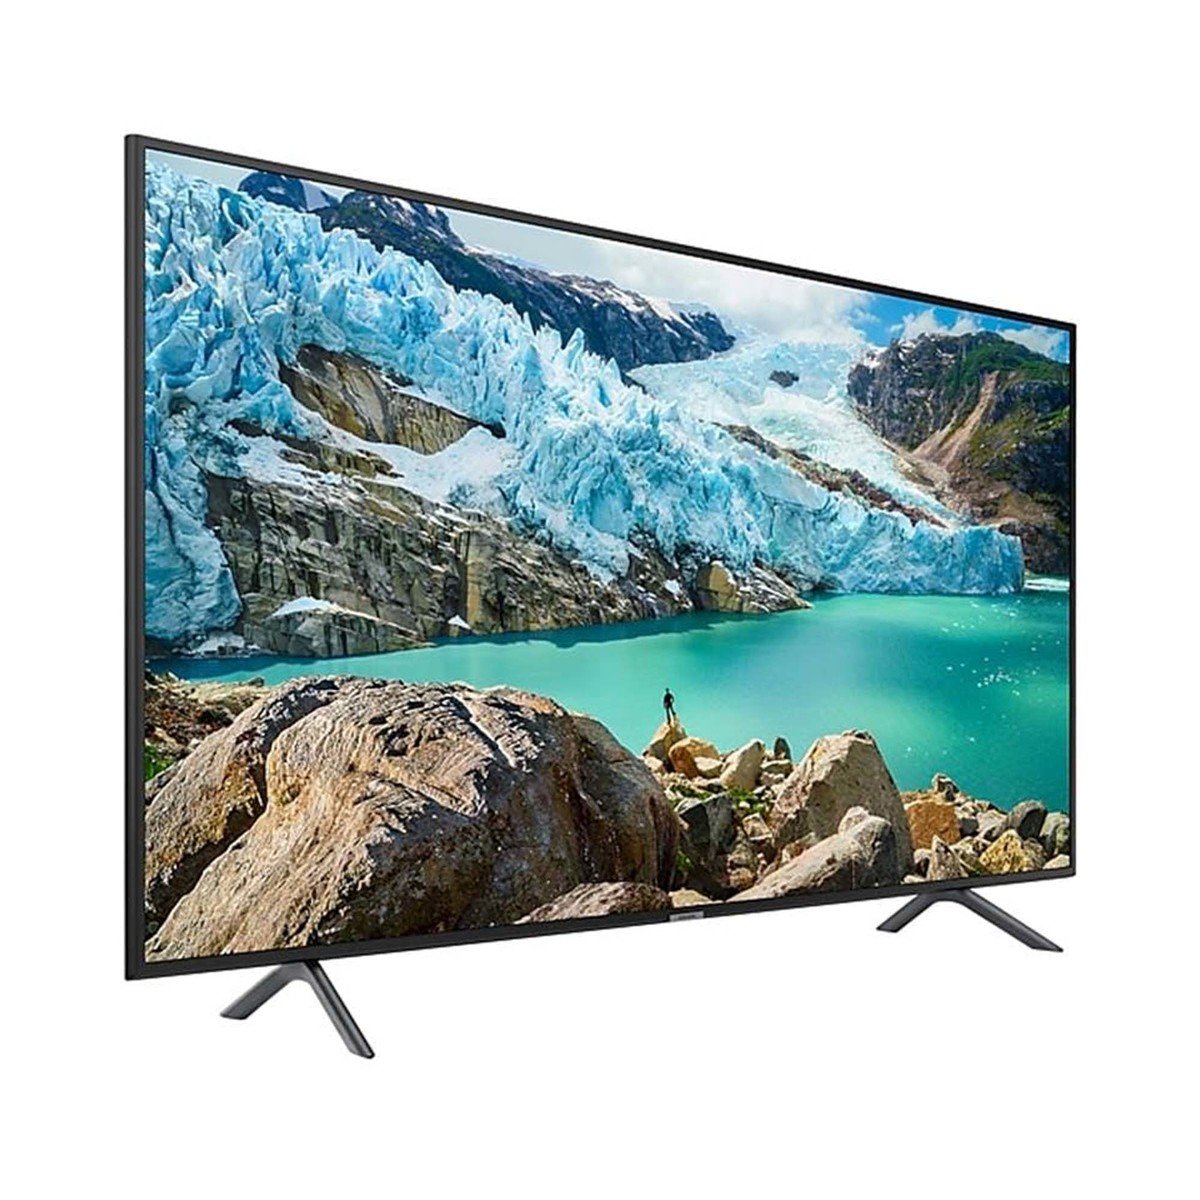 Samsung 4K Ultra HD Smart LED TV UA70RU7100KXZN 70"